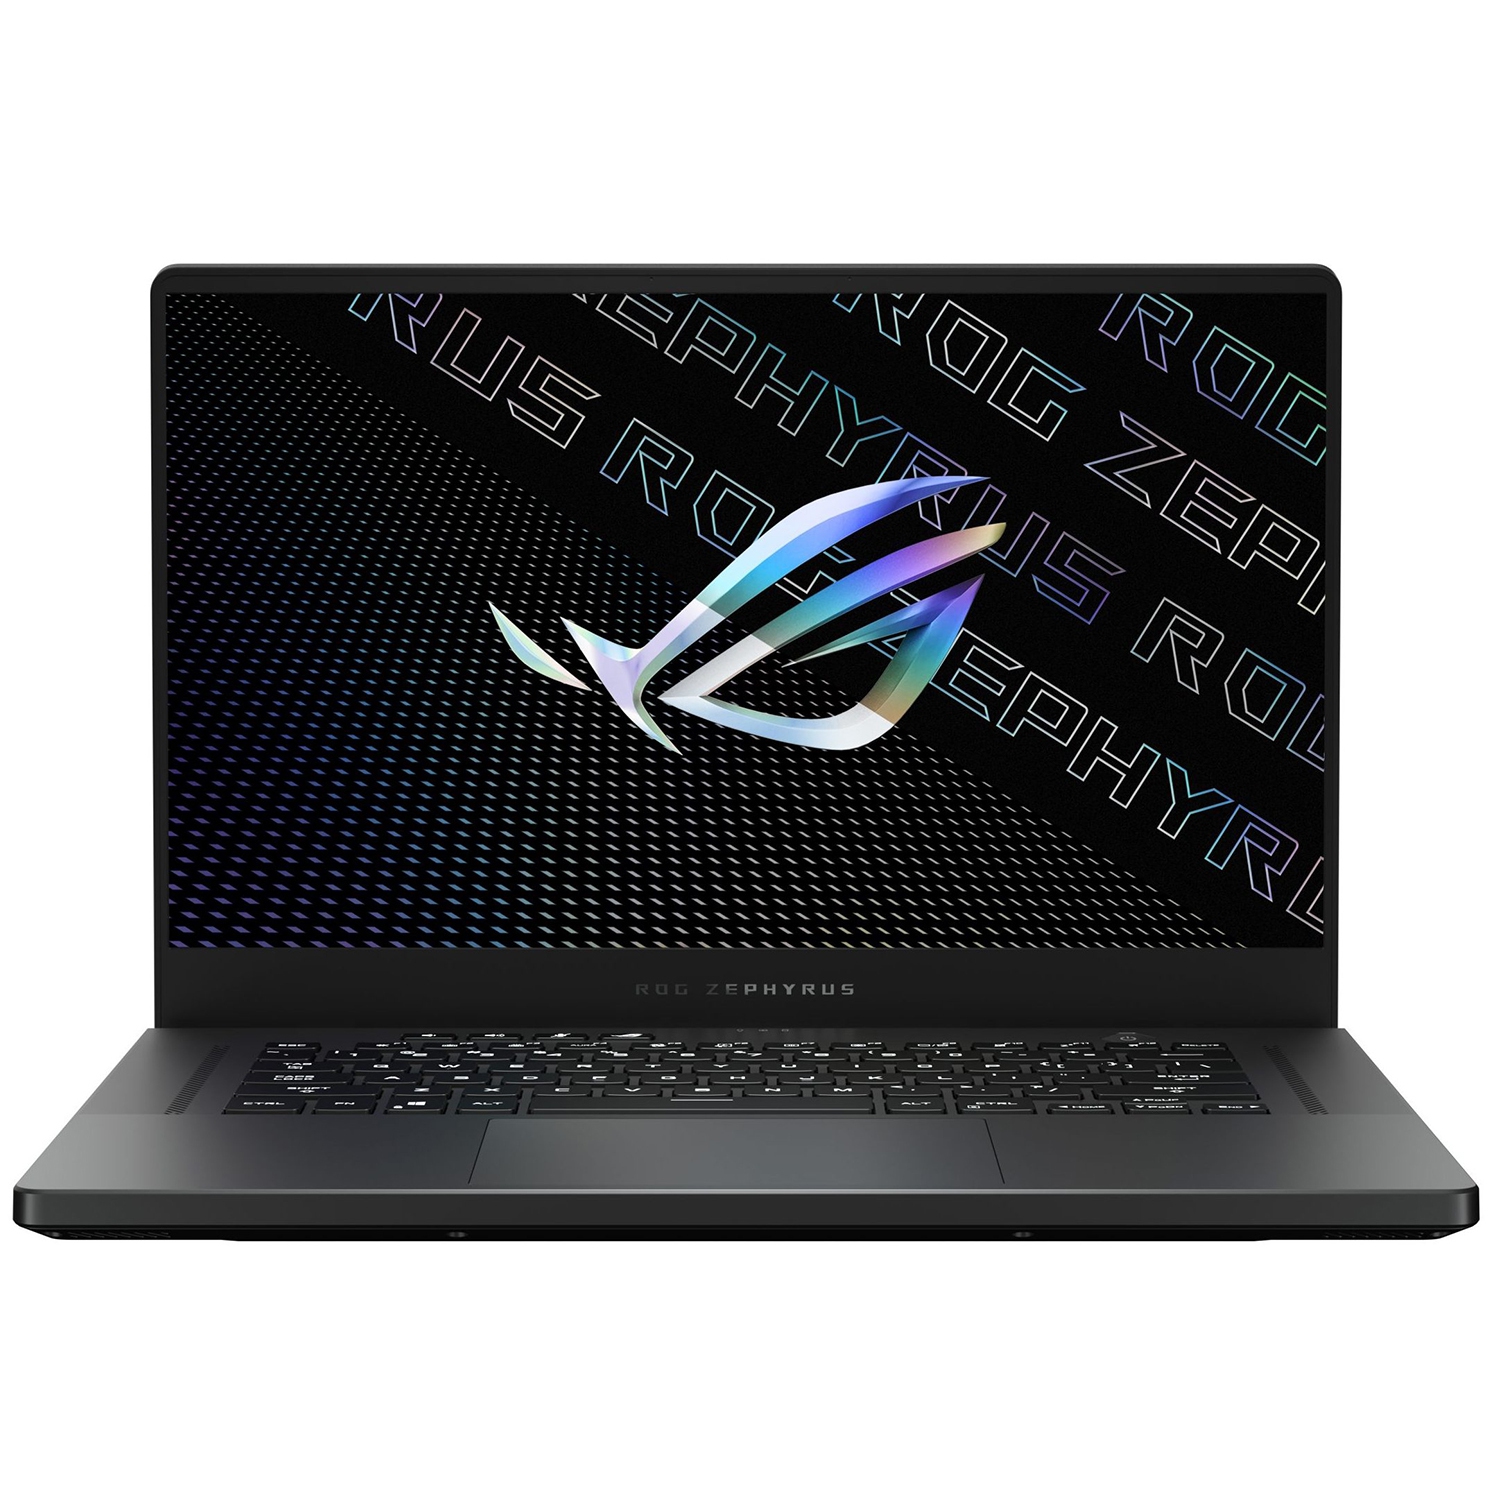 Custom ASUS ROG Zephyrus G15 Laptop (AMD Ryzen 9 5900HS, 16GB RAM, 512GB SSD, NVIDIA RTX 3060, Win 10 Home)